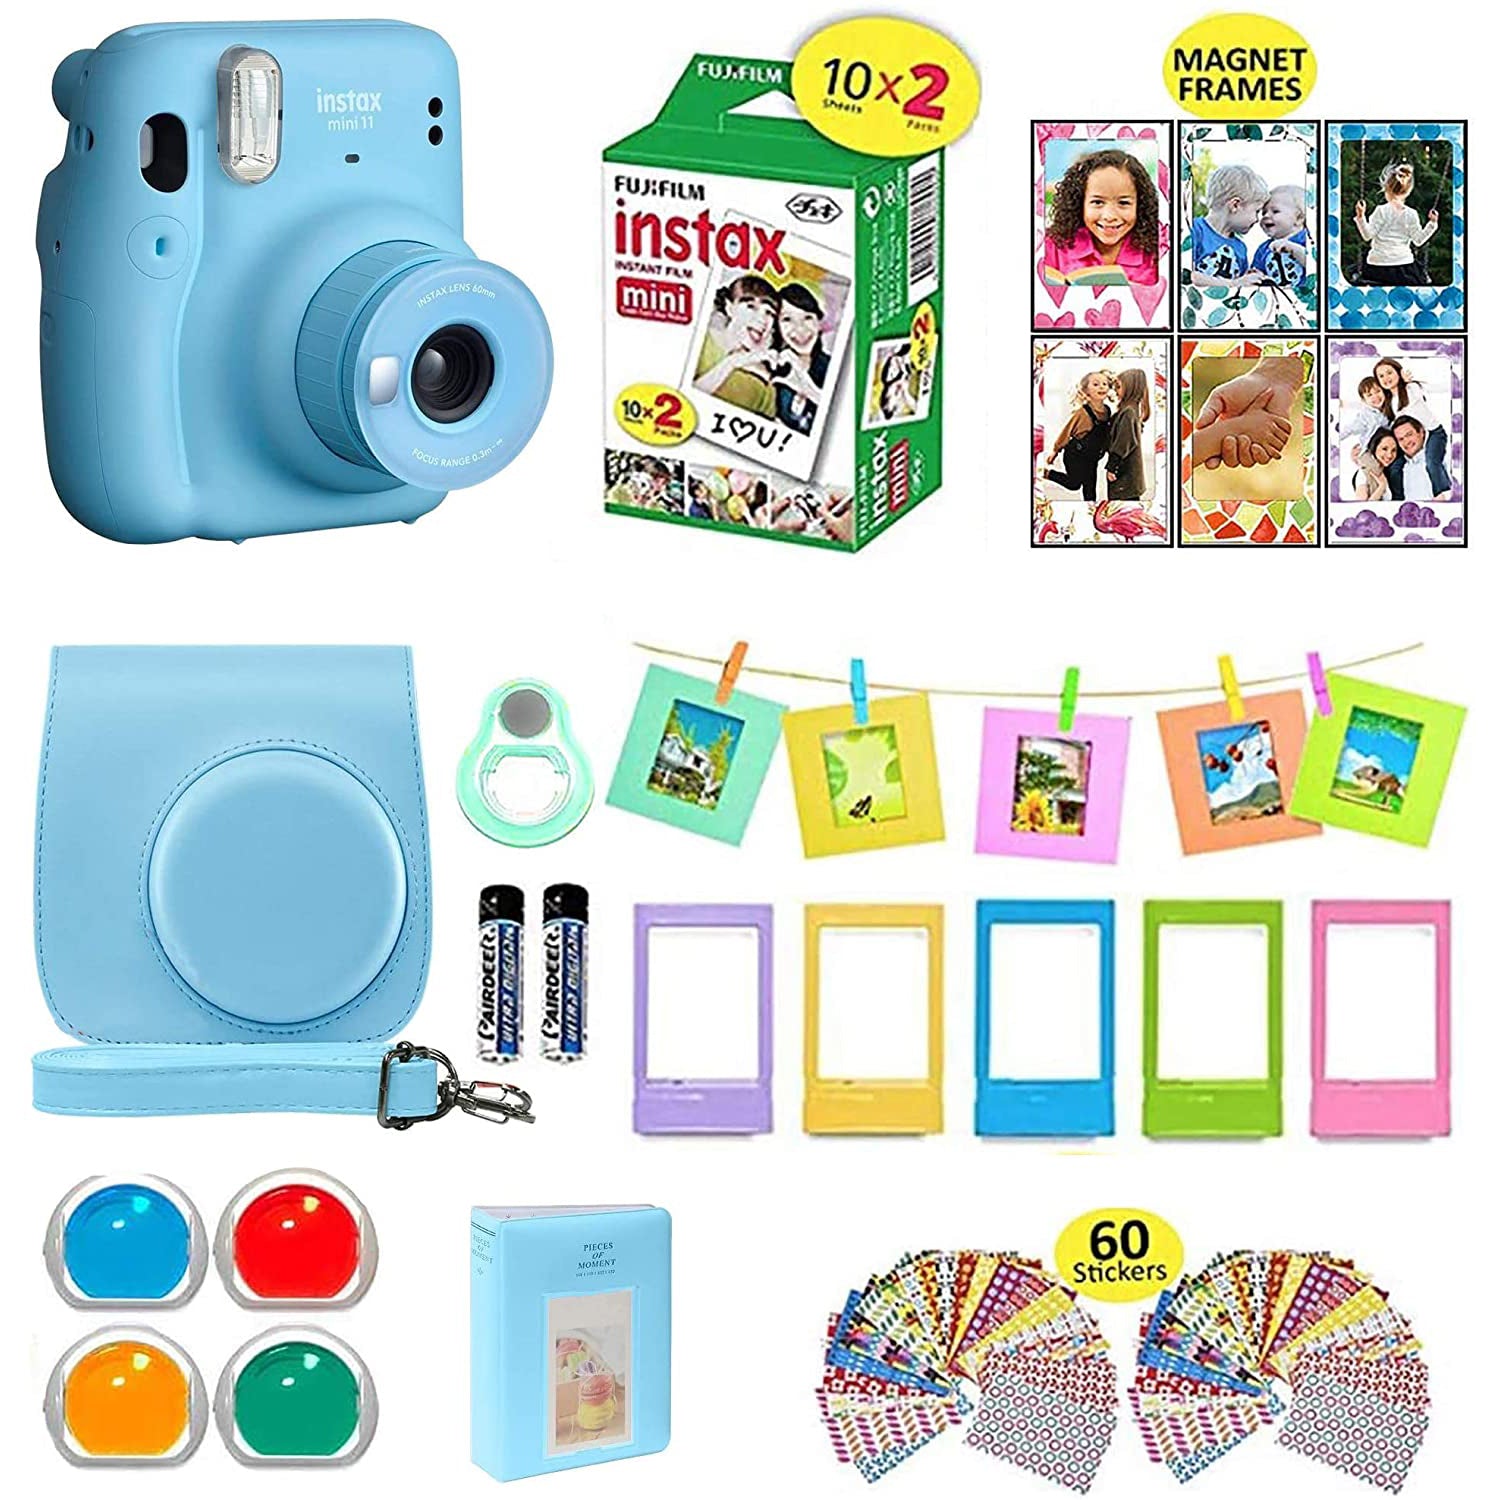 Fujifilm Instax Mini 11 Instant Camera Sky Blue + Shutter Compatible Carrying Case + Fuji Film Value Pack (20 Sheets) + Shutter Accessories Bundle, Color Filters, Photo Album, Assorted Frames